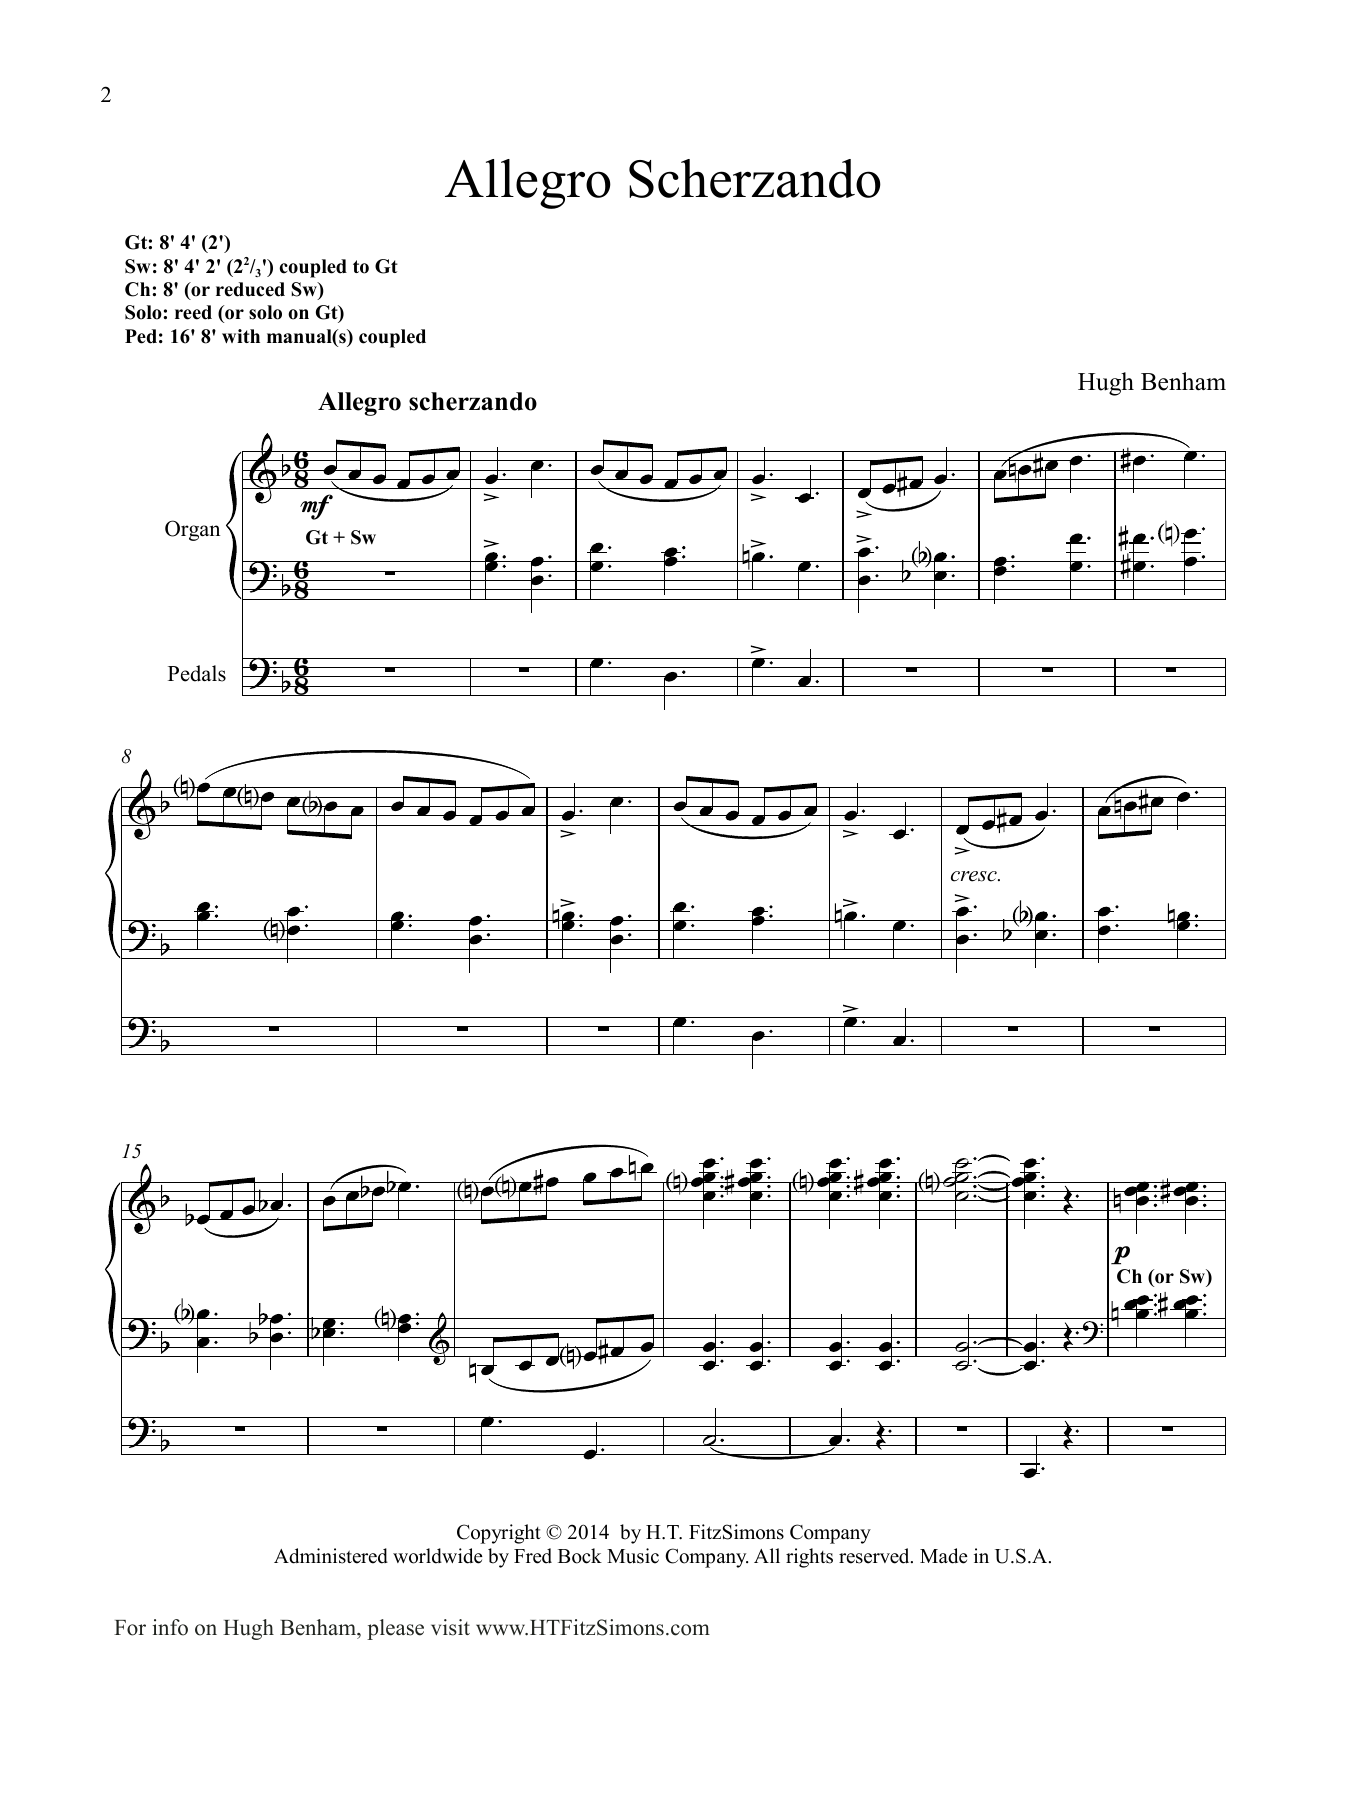 Hugh Benham Allegro Scherzando Sheet Music Notes & Chords for Organ - Download or Print PDF